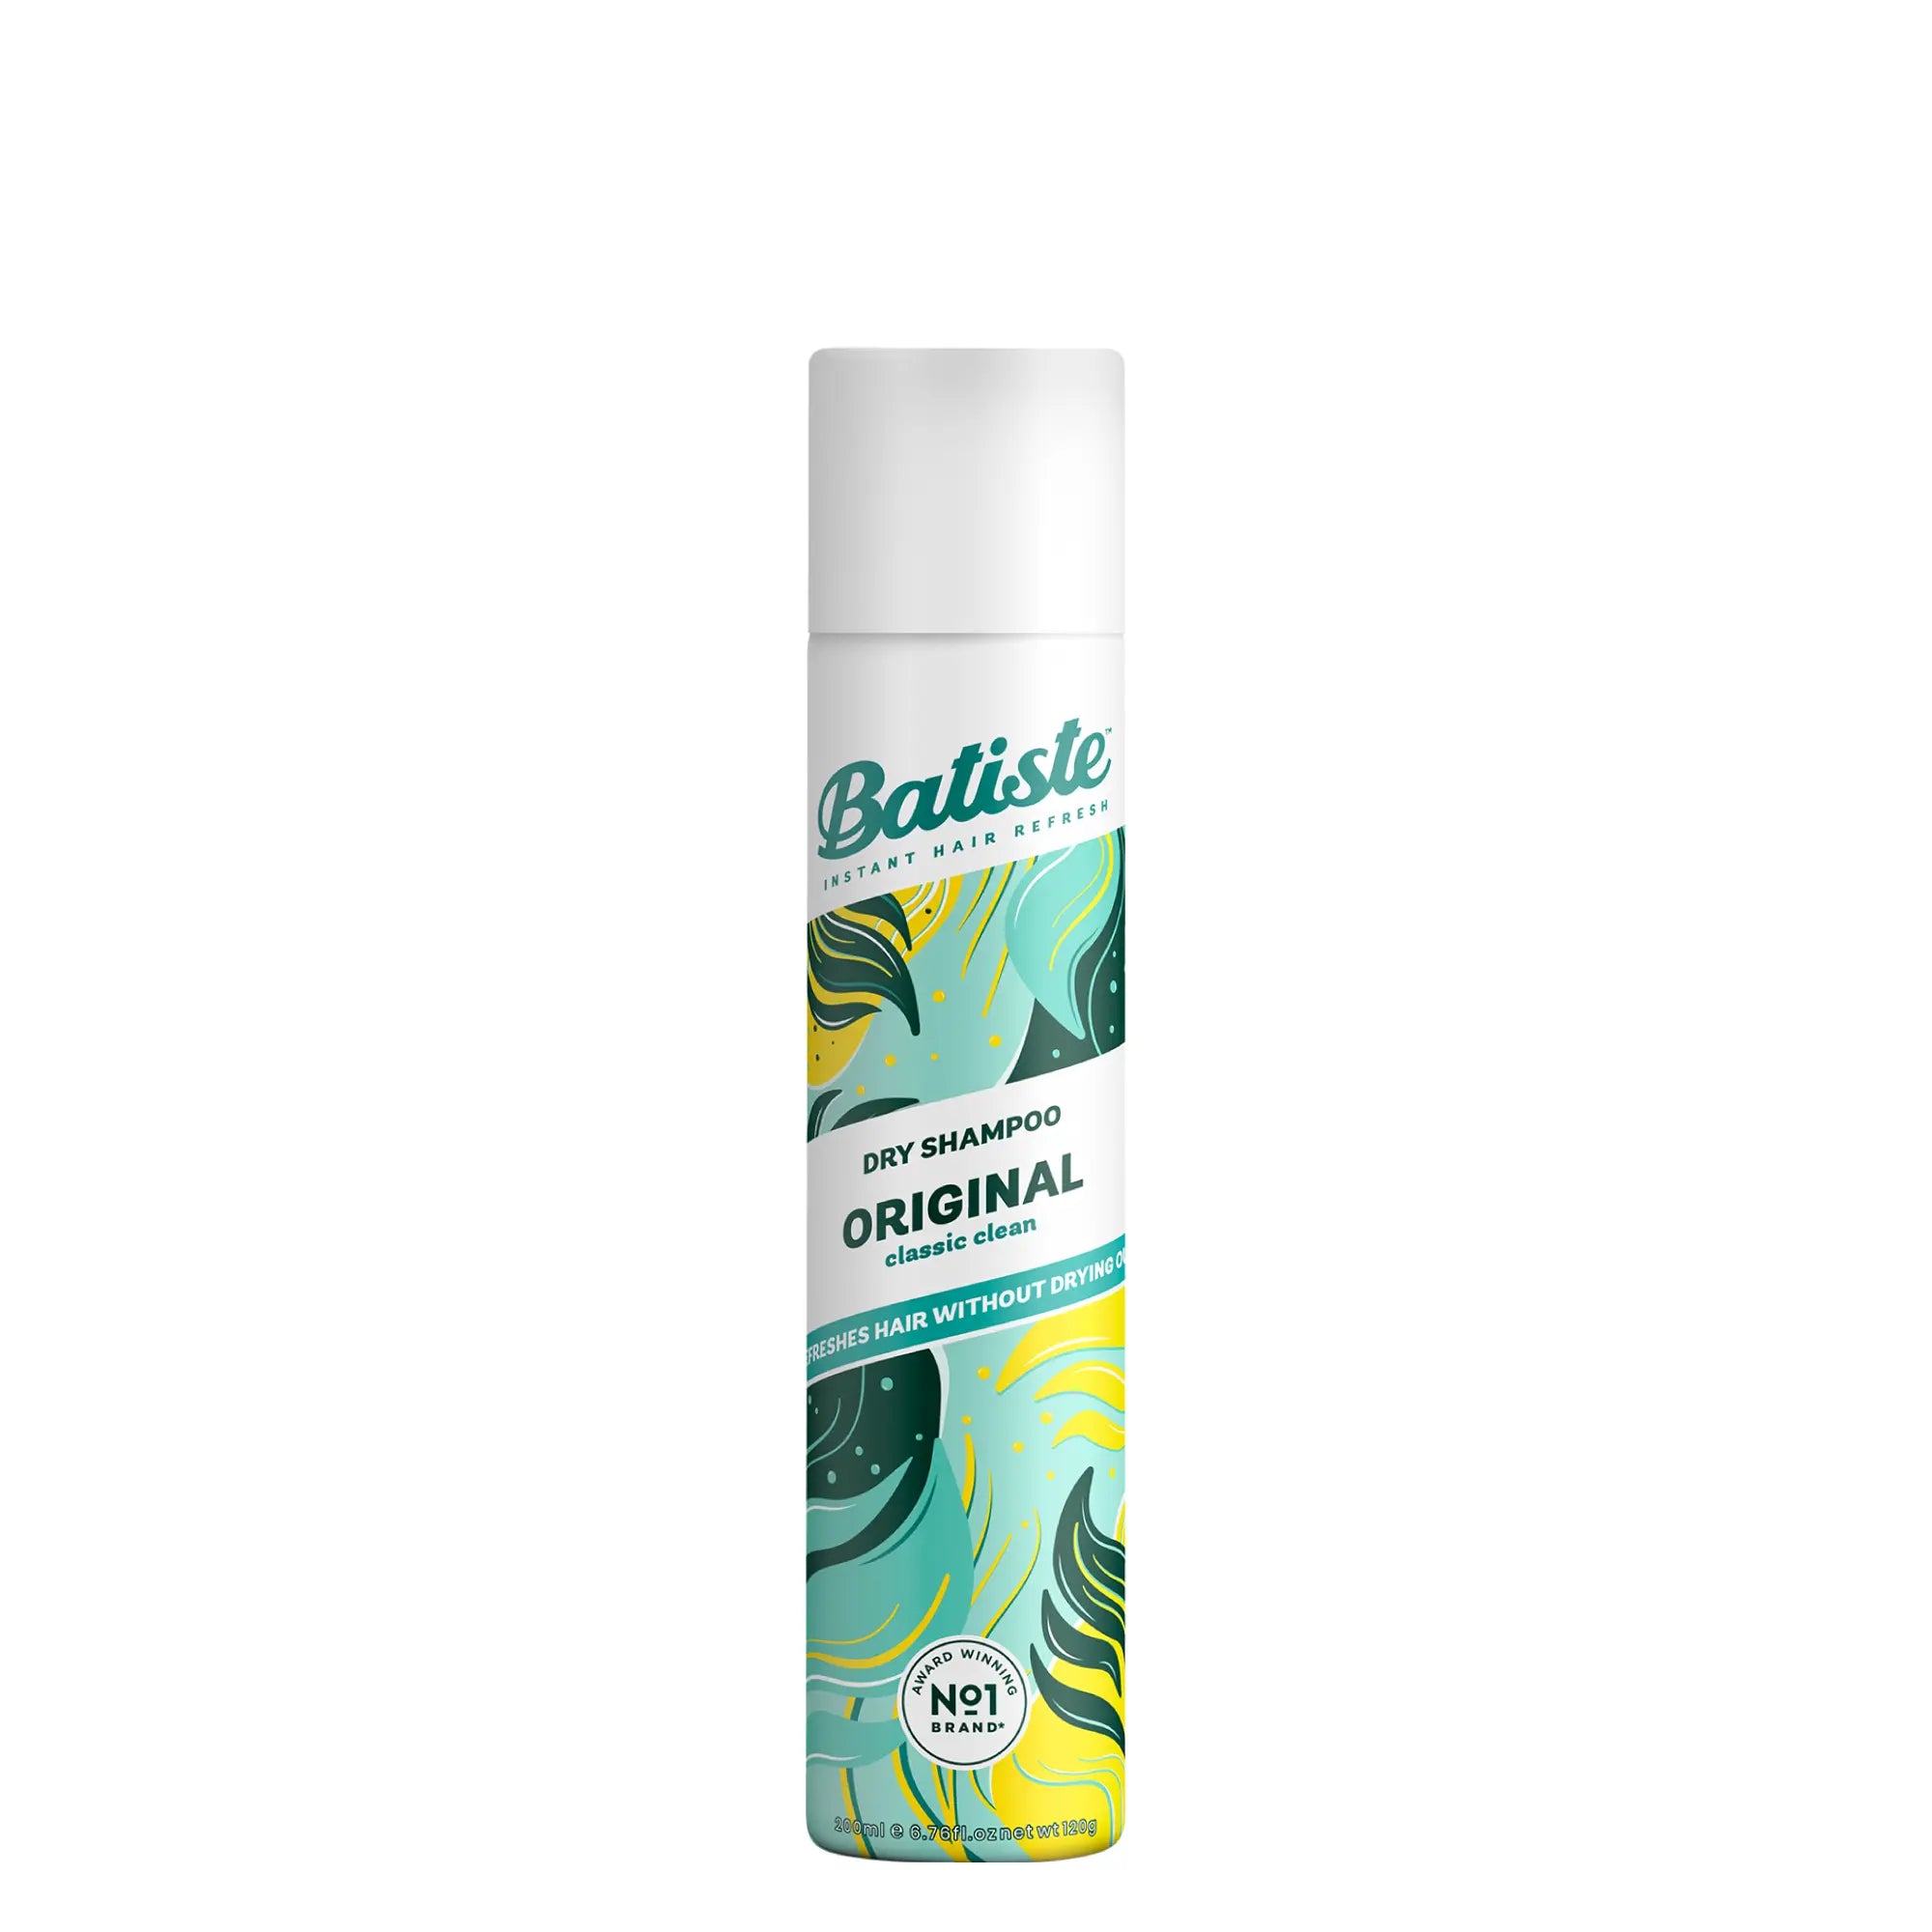 Batiste shampo original 200ml Batiste